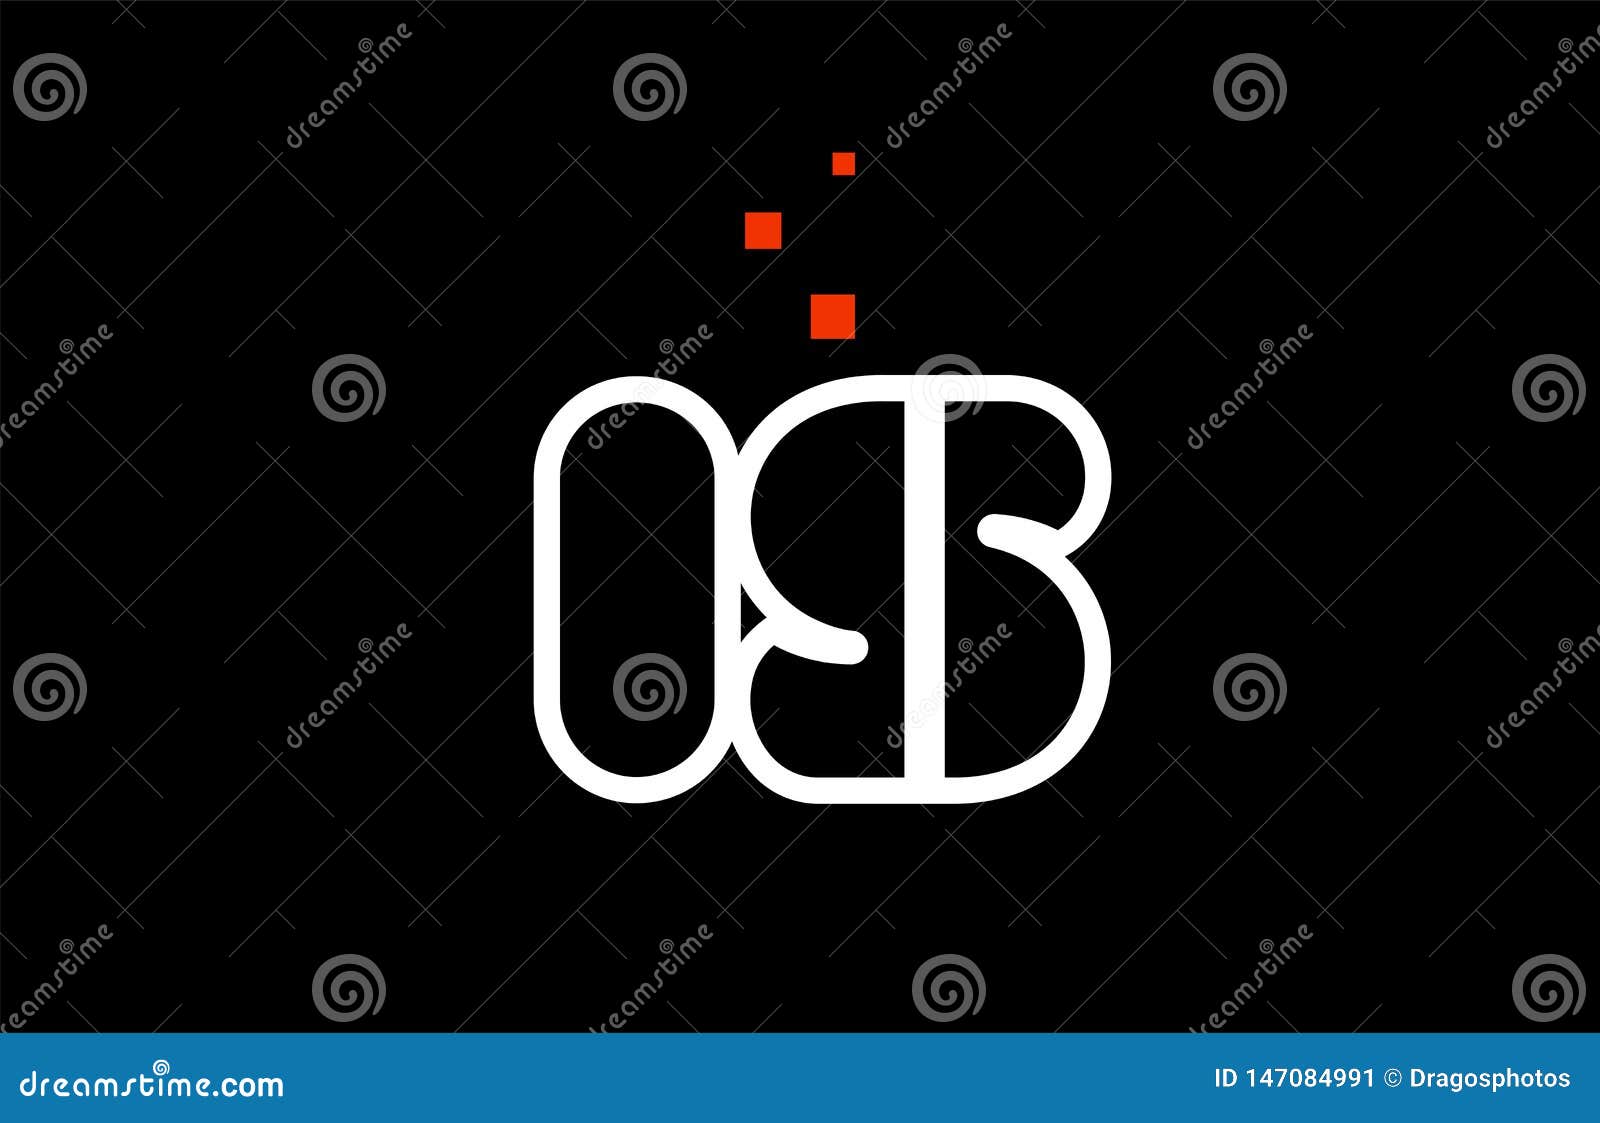 IS I S Black White Red Alphabet Letter Combination Logo ...